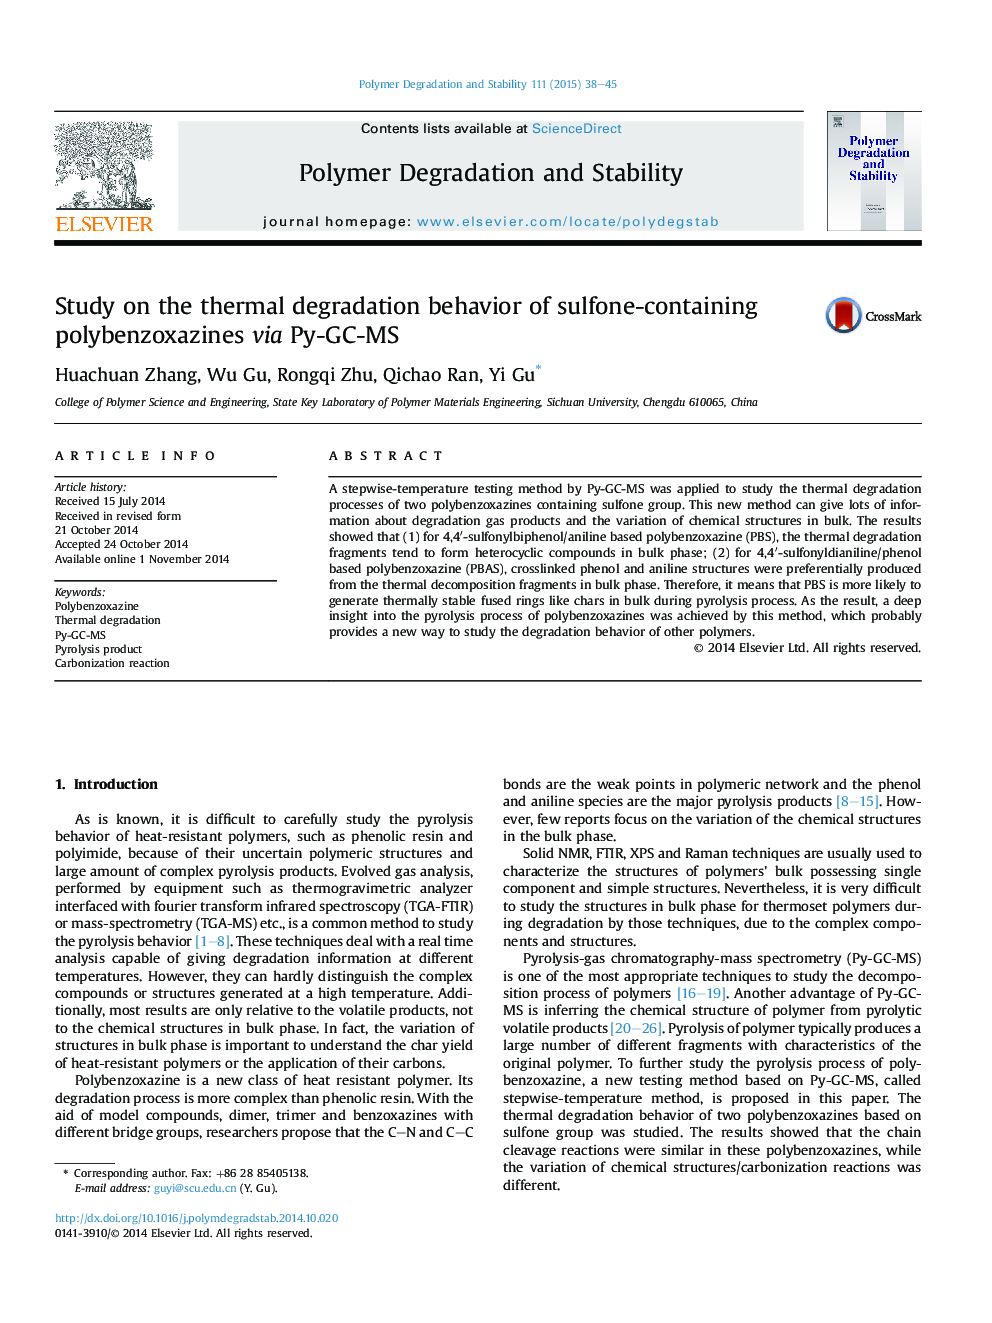 Study on the thermal degradation behavior of sulfone-containing polybenzoxazines via Py-GC-MS